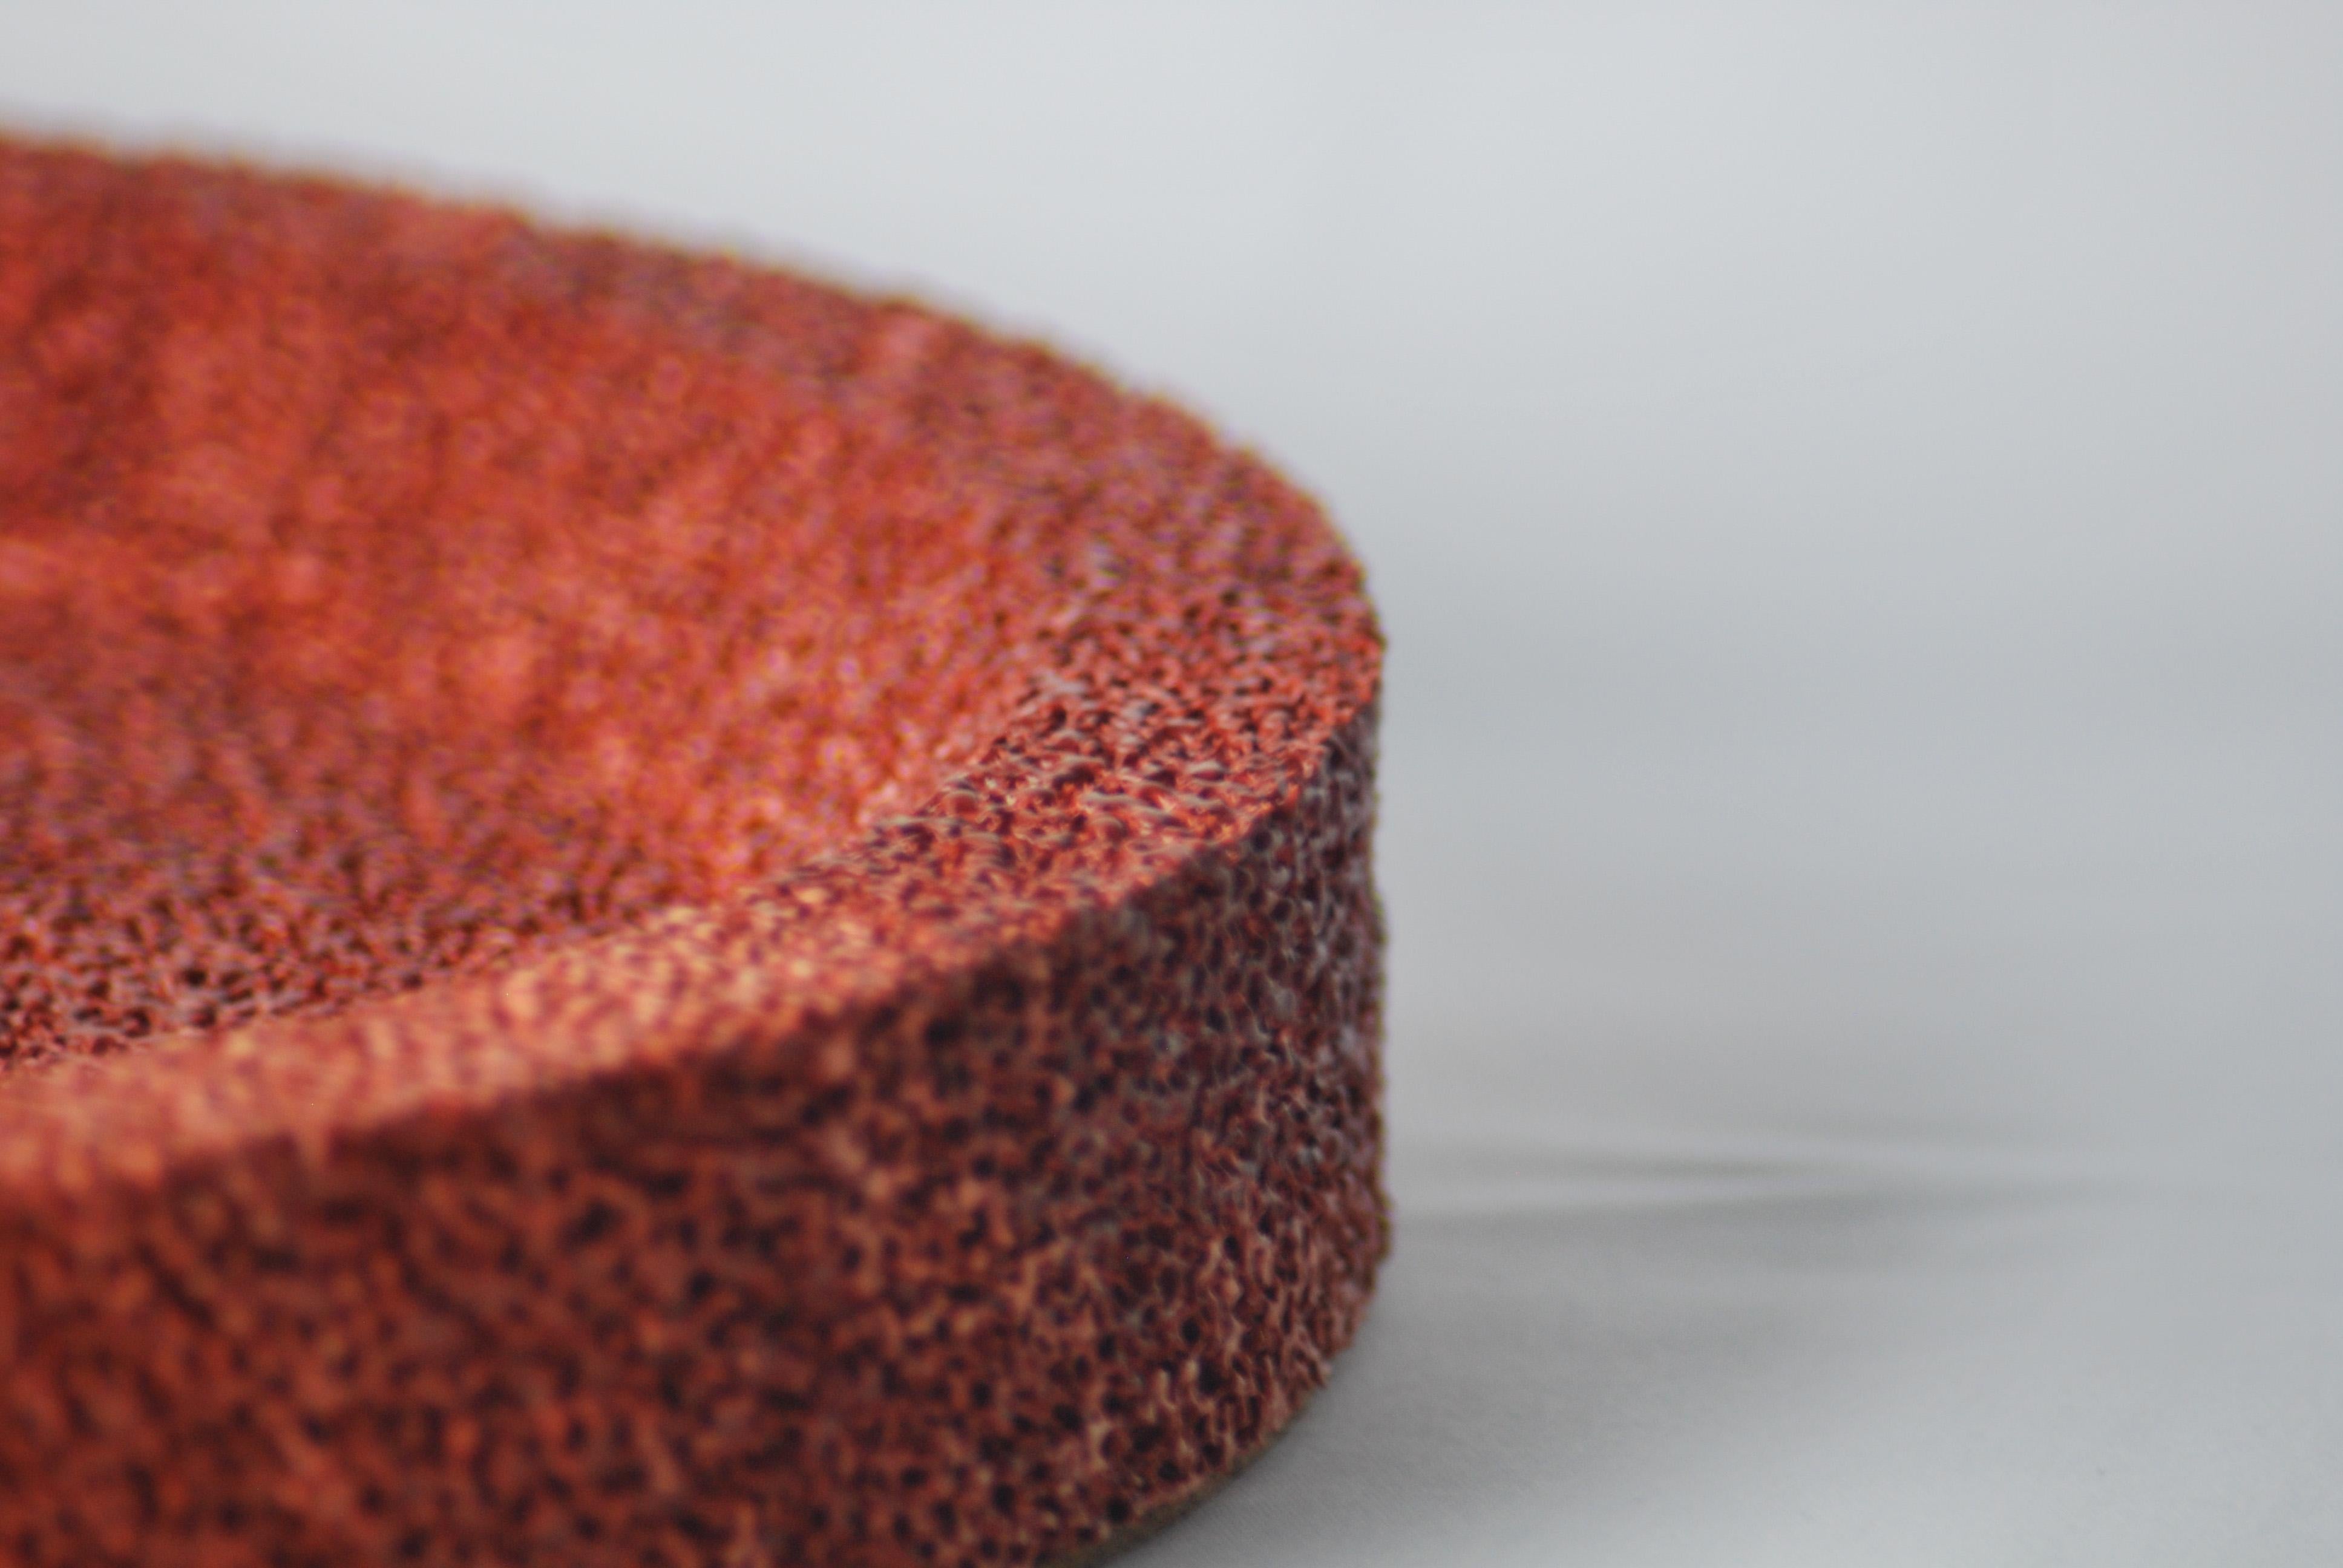 Brick Red Porous Ceramic Centrepiece Bowl For Sale 4